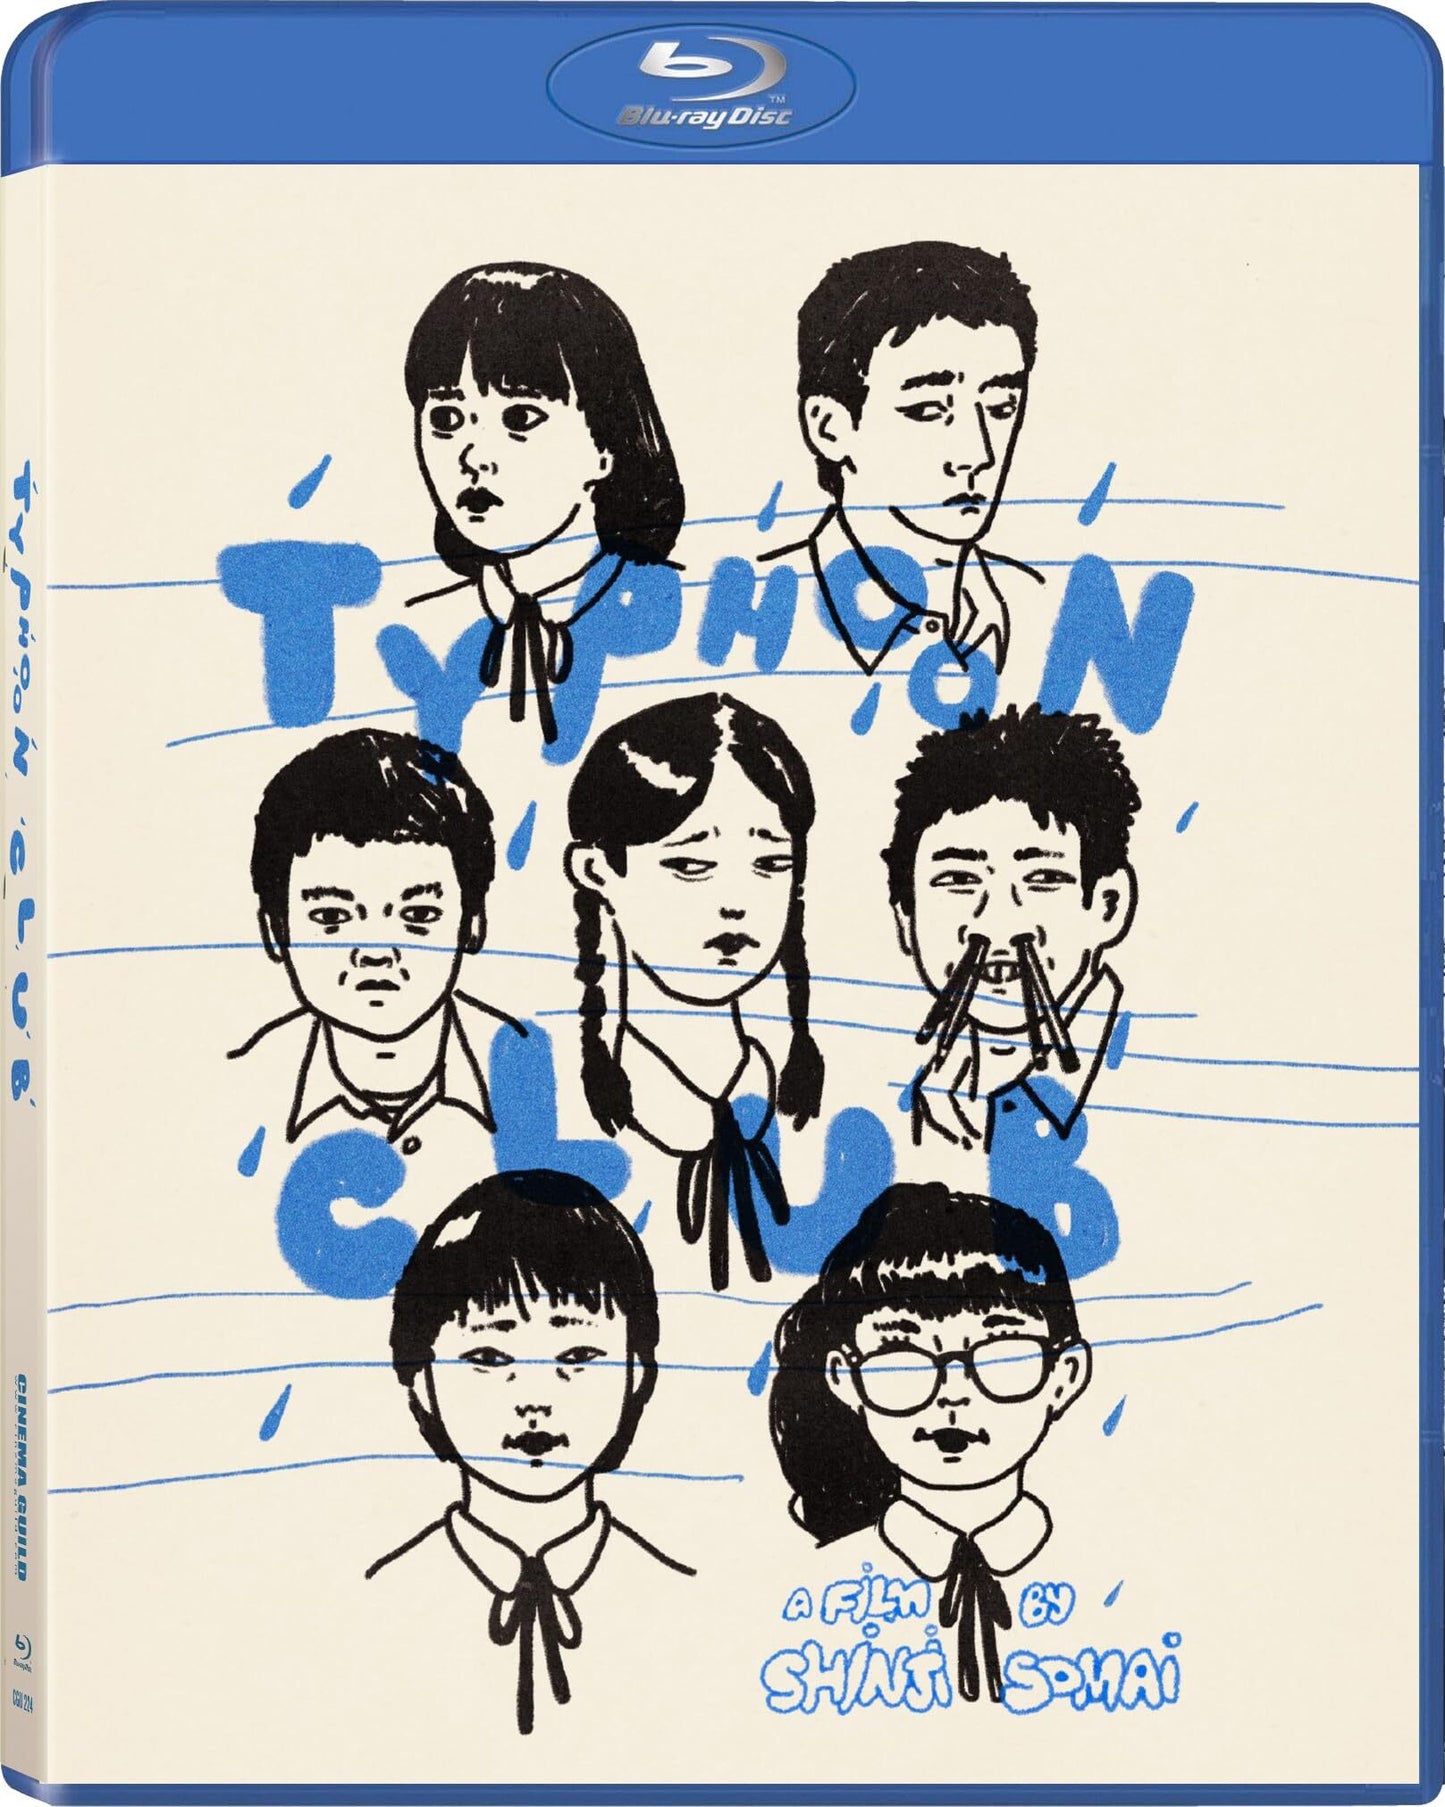 TYPHOON CLUB (1985)